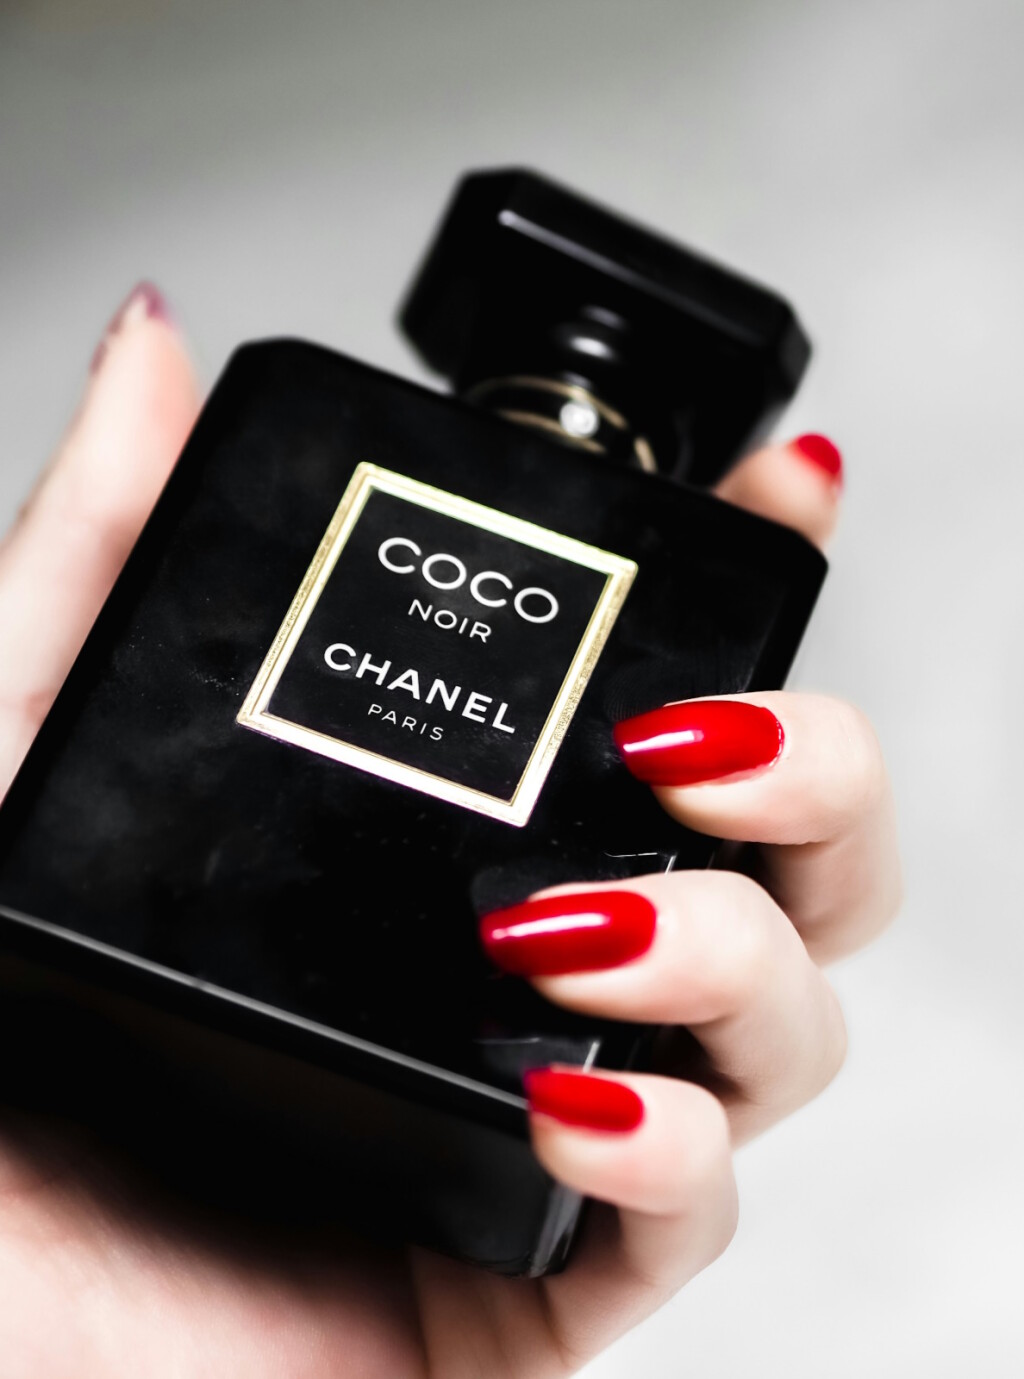 Coco Noir Chanel Parfum